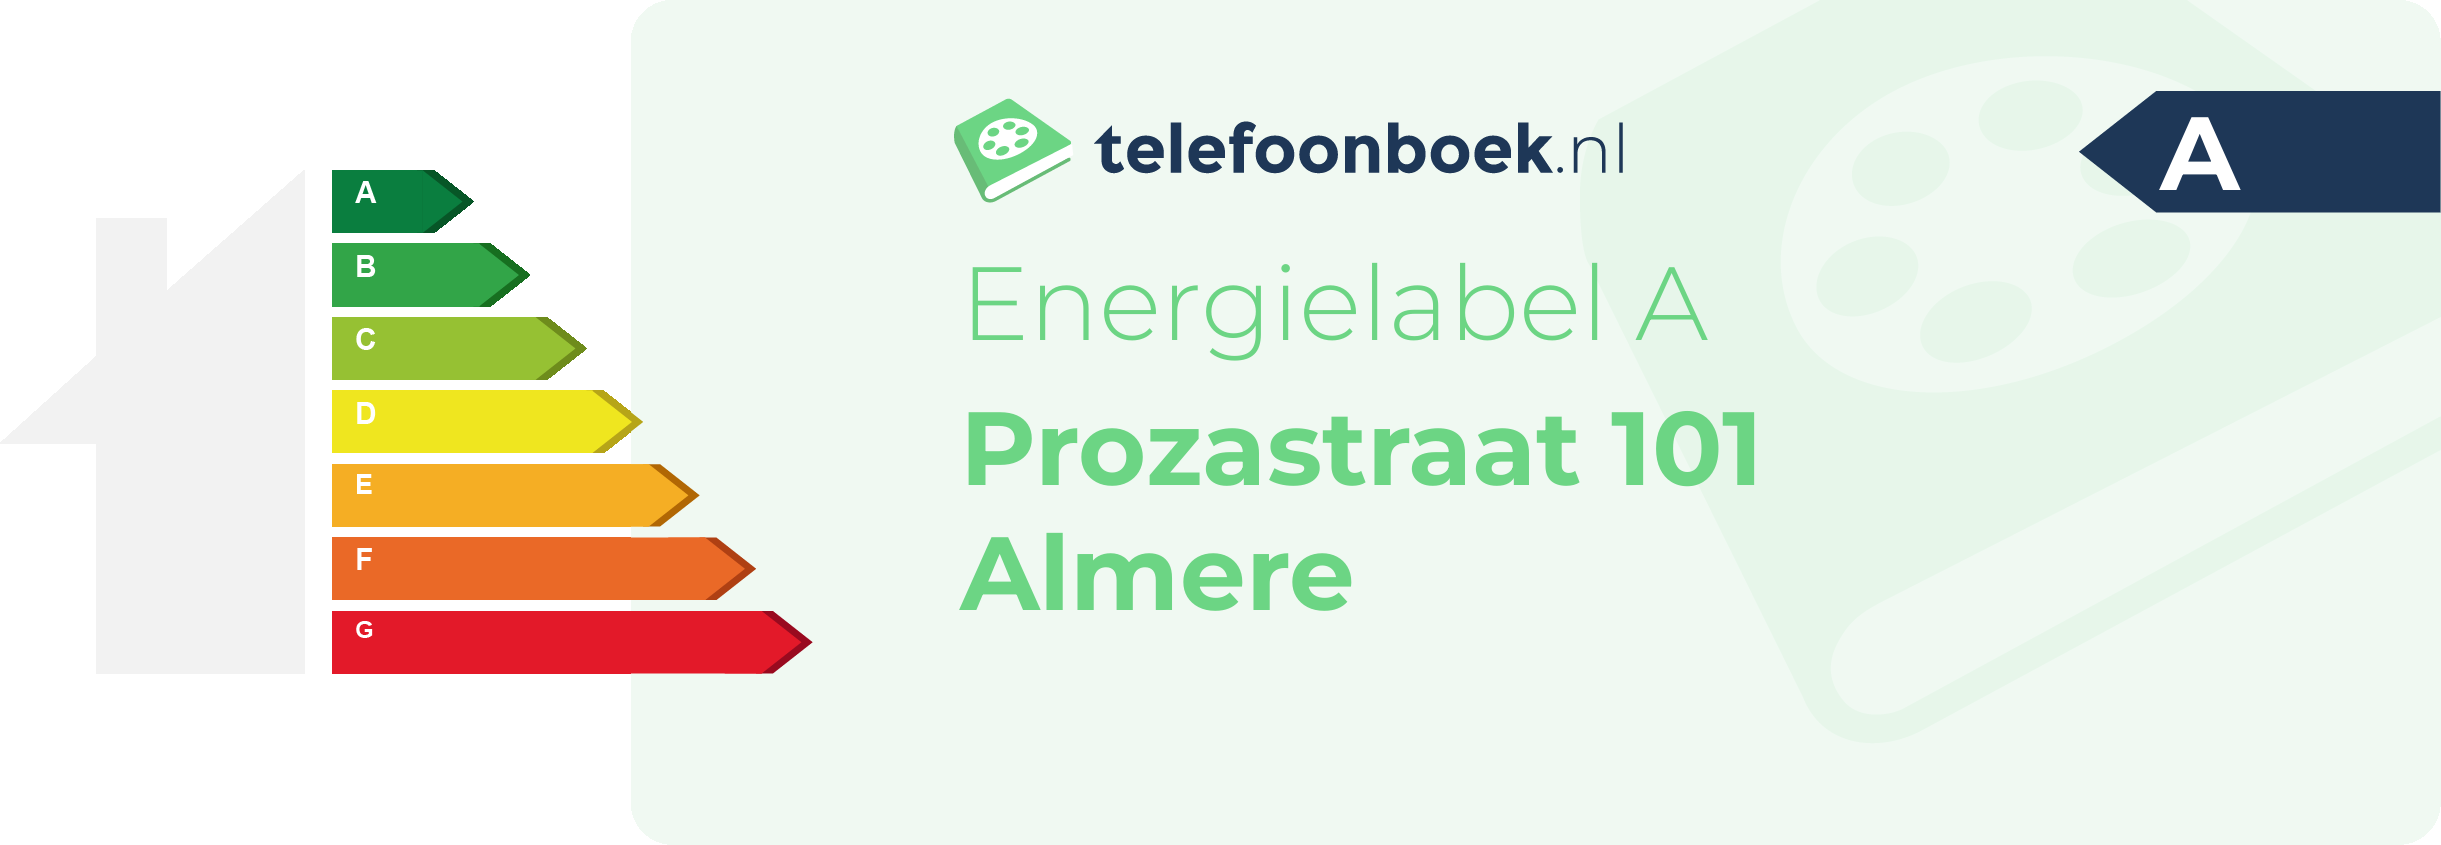 Energielabel Prozastraat 101 Almere